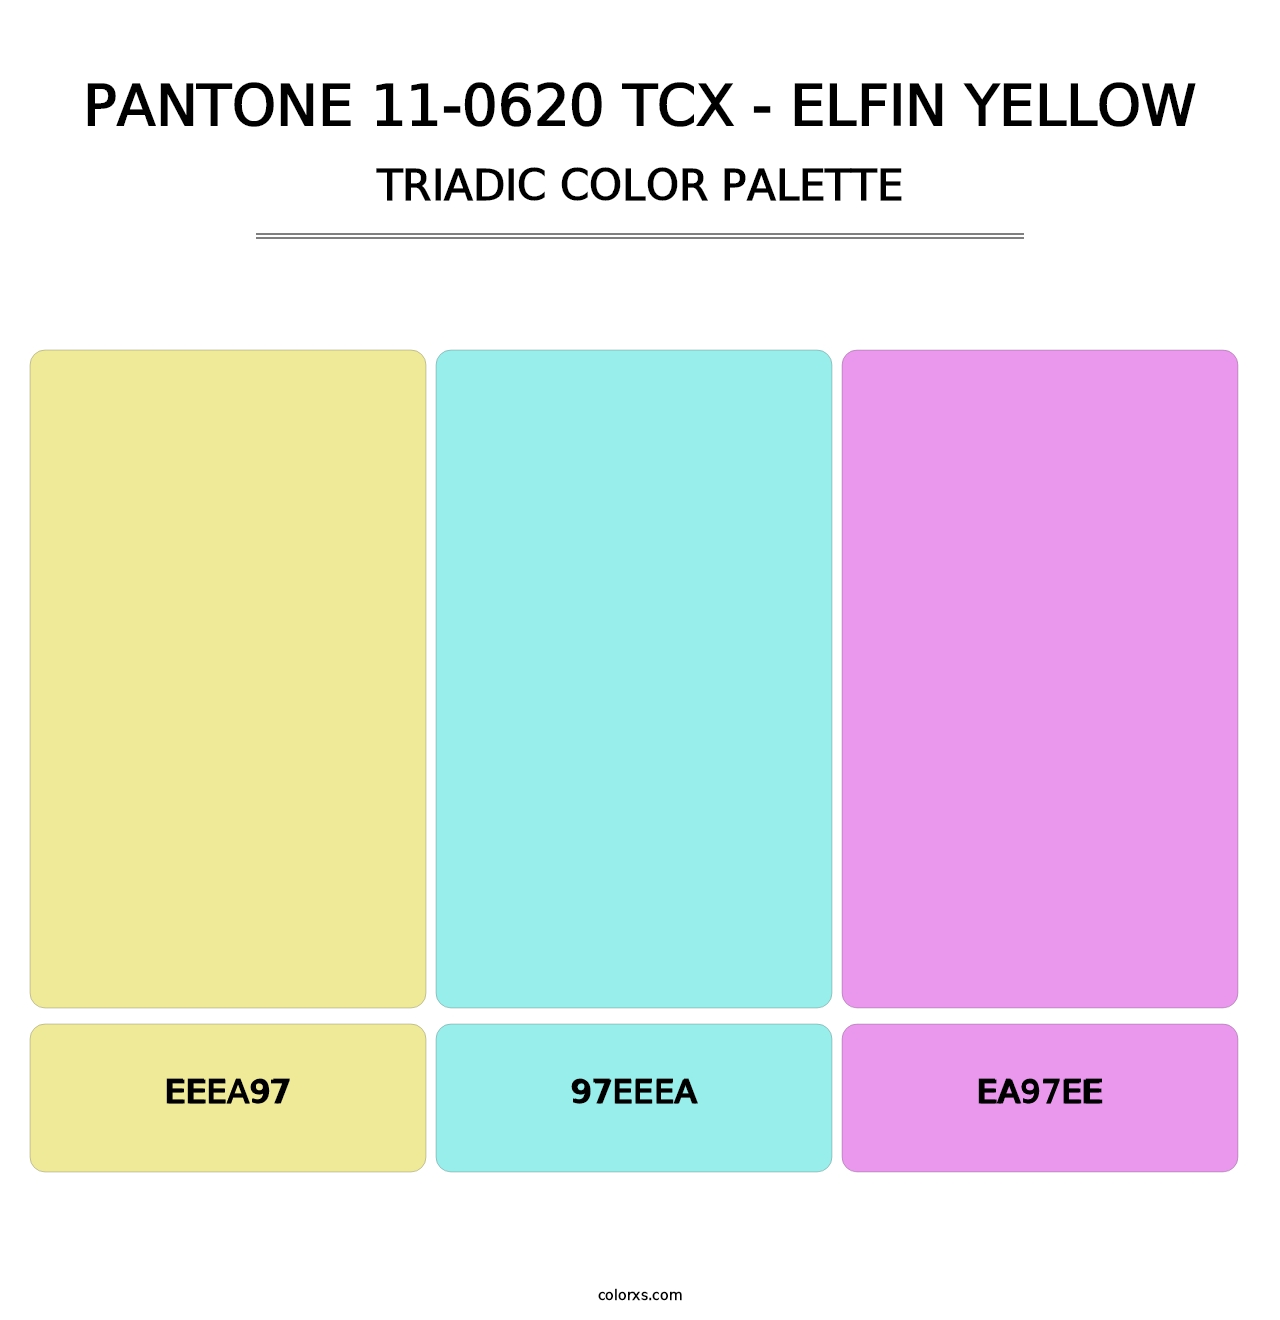 PANTONE 11-0620 TCX - Elfin Yellow - Triadic Color Palette